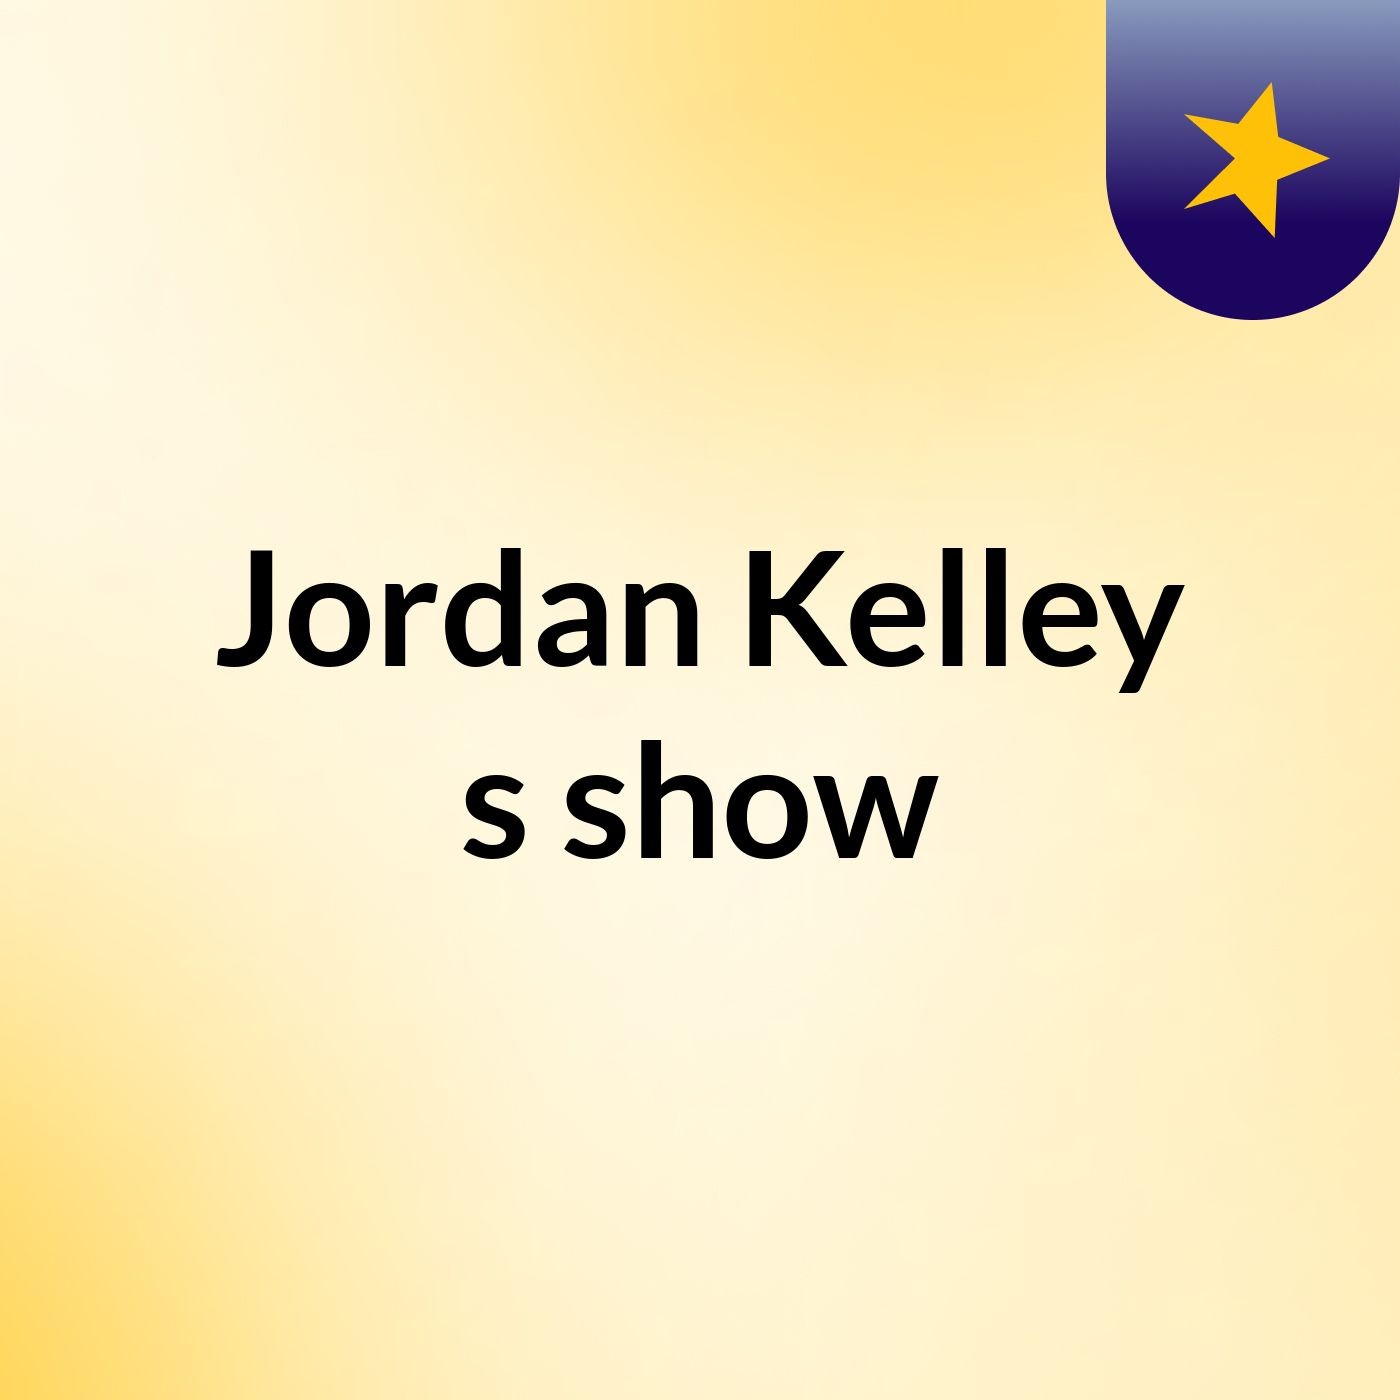 Jordan Kelley's show